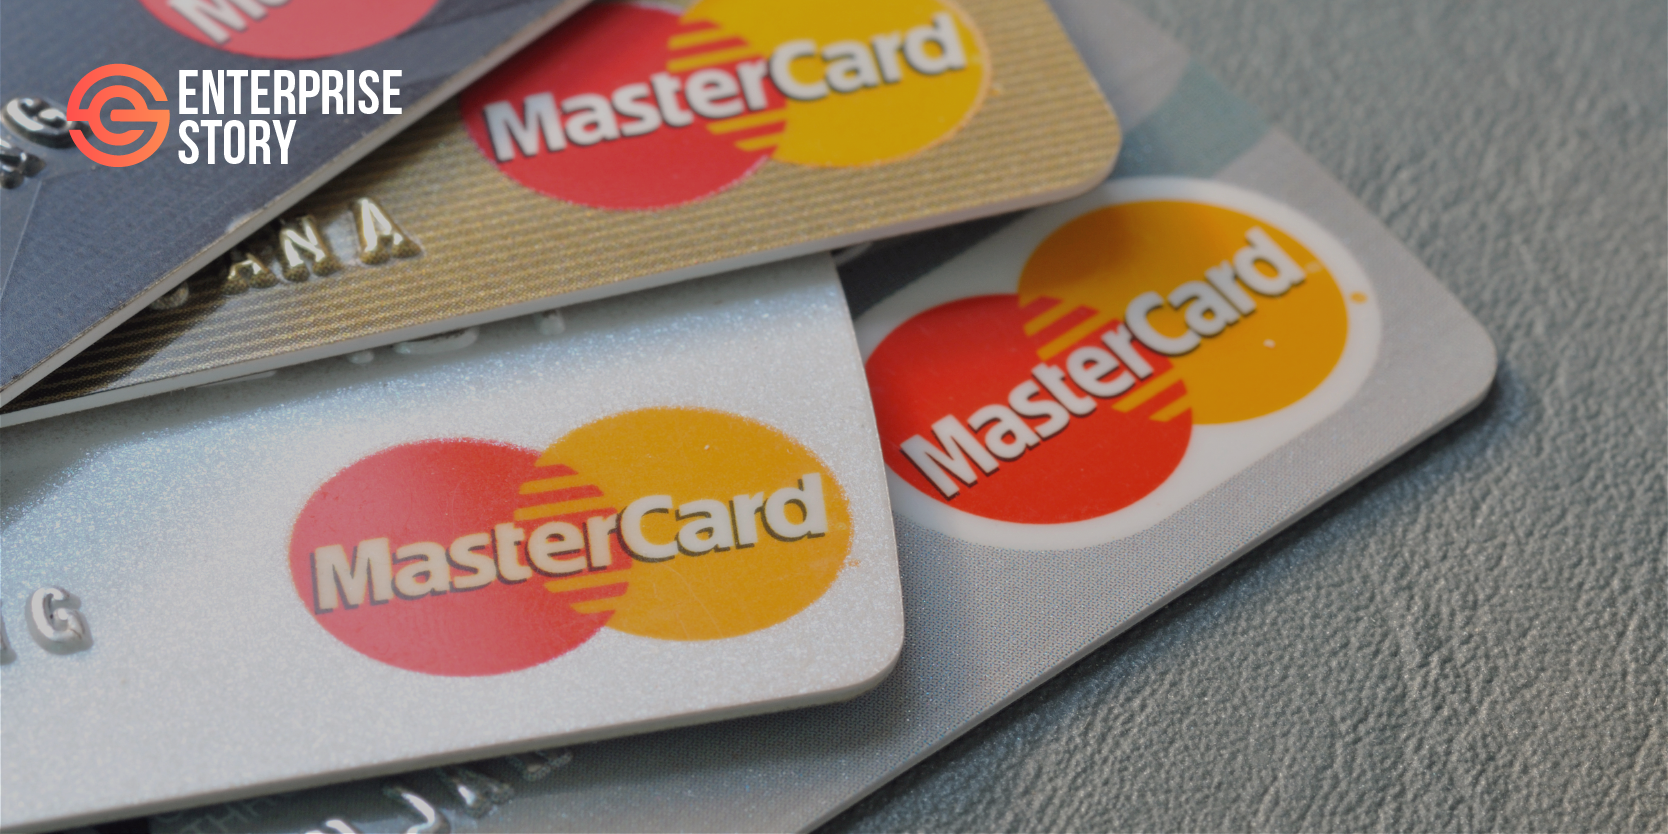 RBI ban on Mastercard impacts banking ecosystem